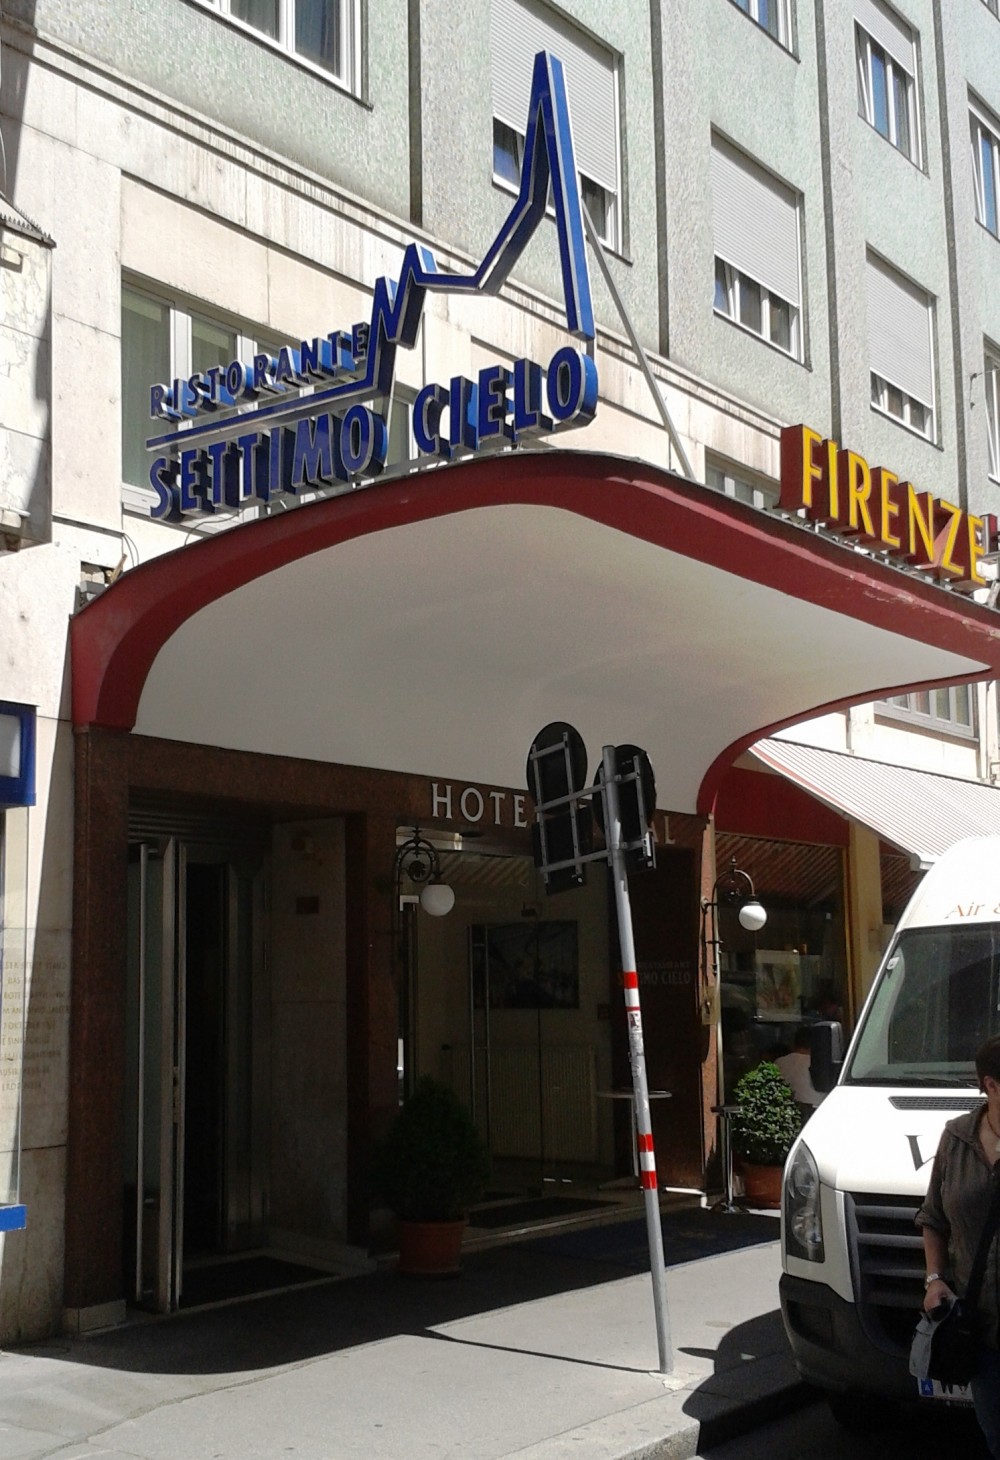 Settimo Cielo - Der Hotel- & Restauranteingang - Ristorante Settimo Cielo - Wien